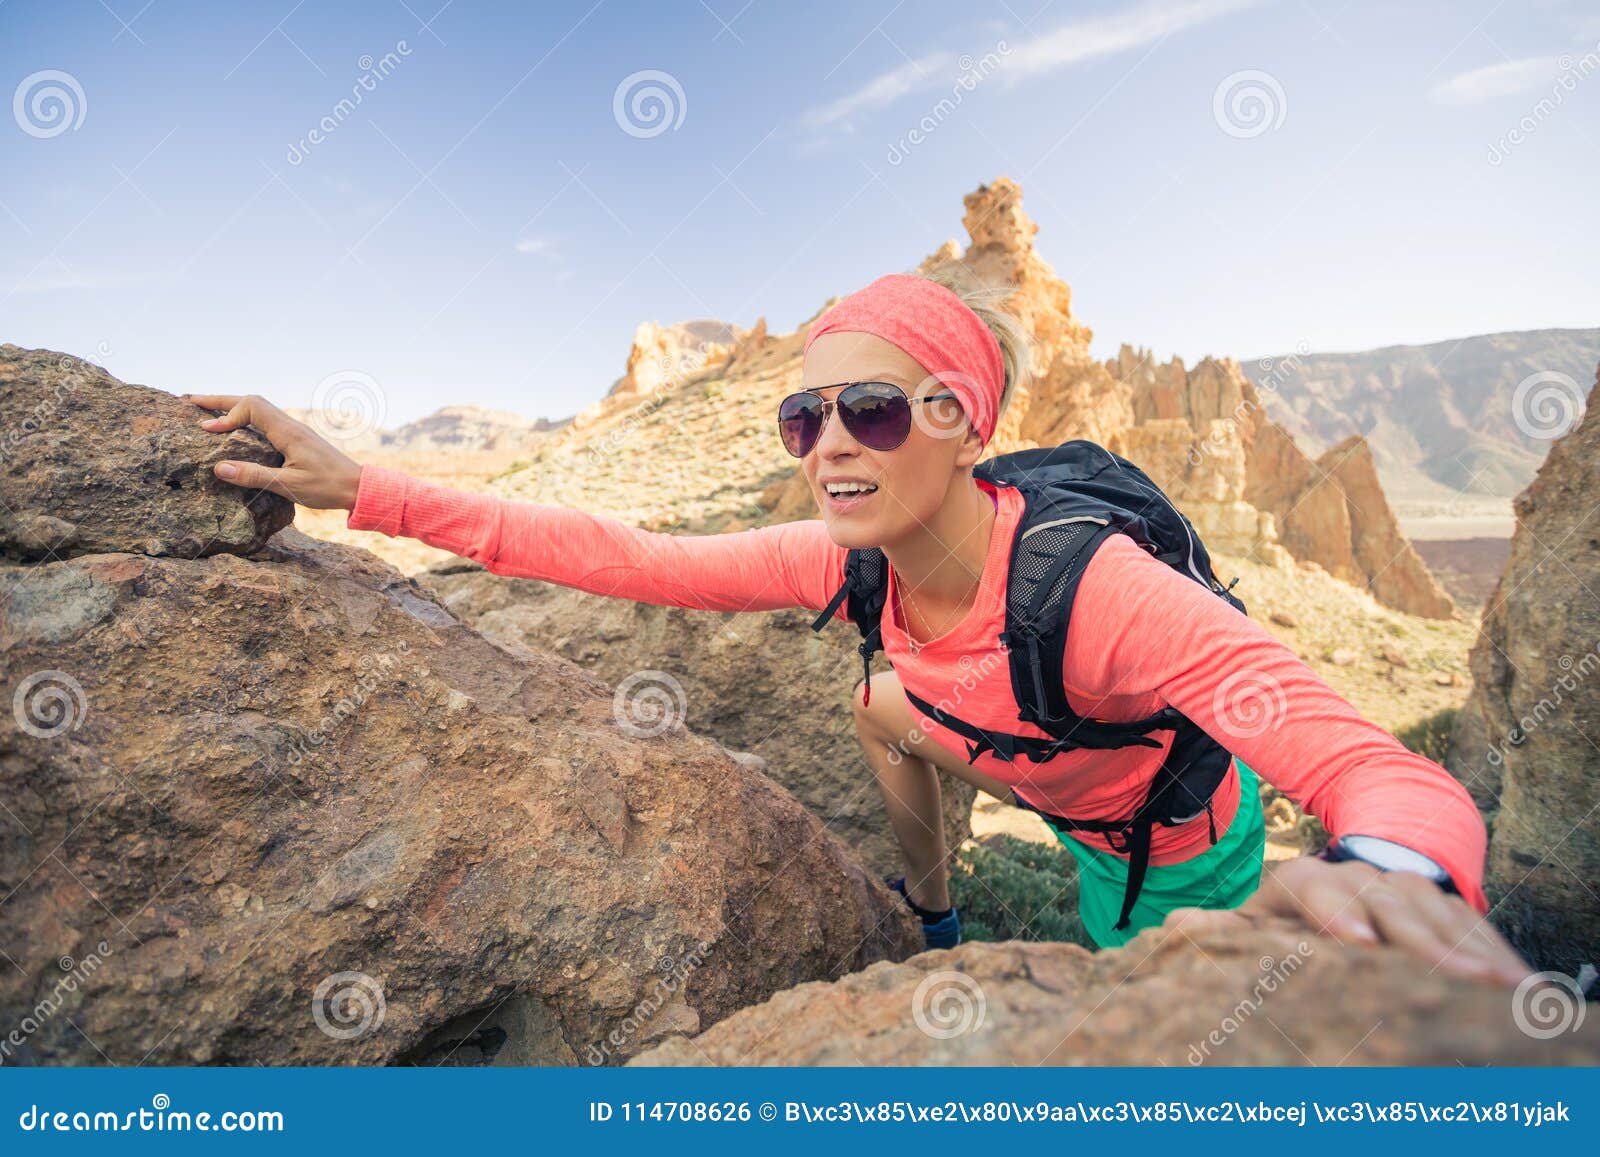 woman hiker reached mountain top, backpacker adventure